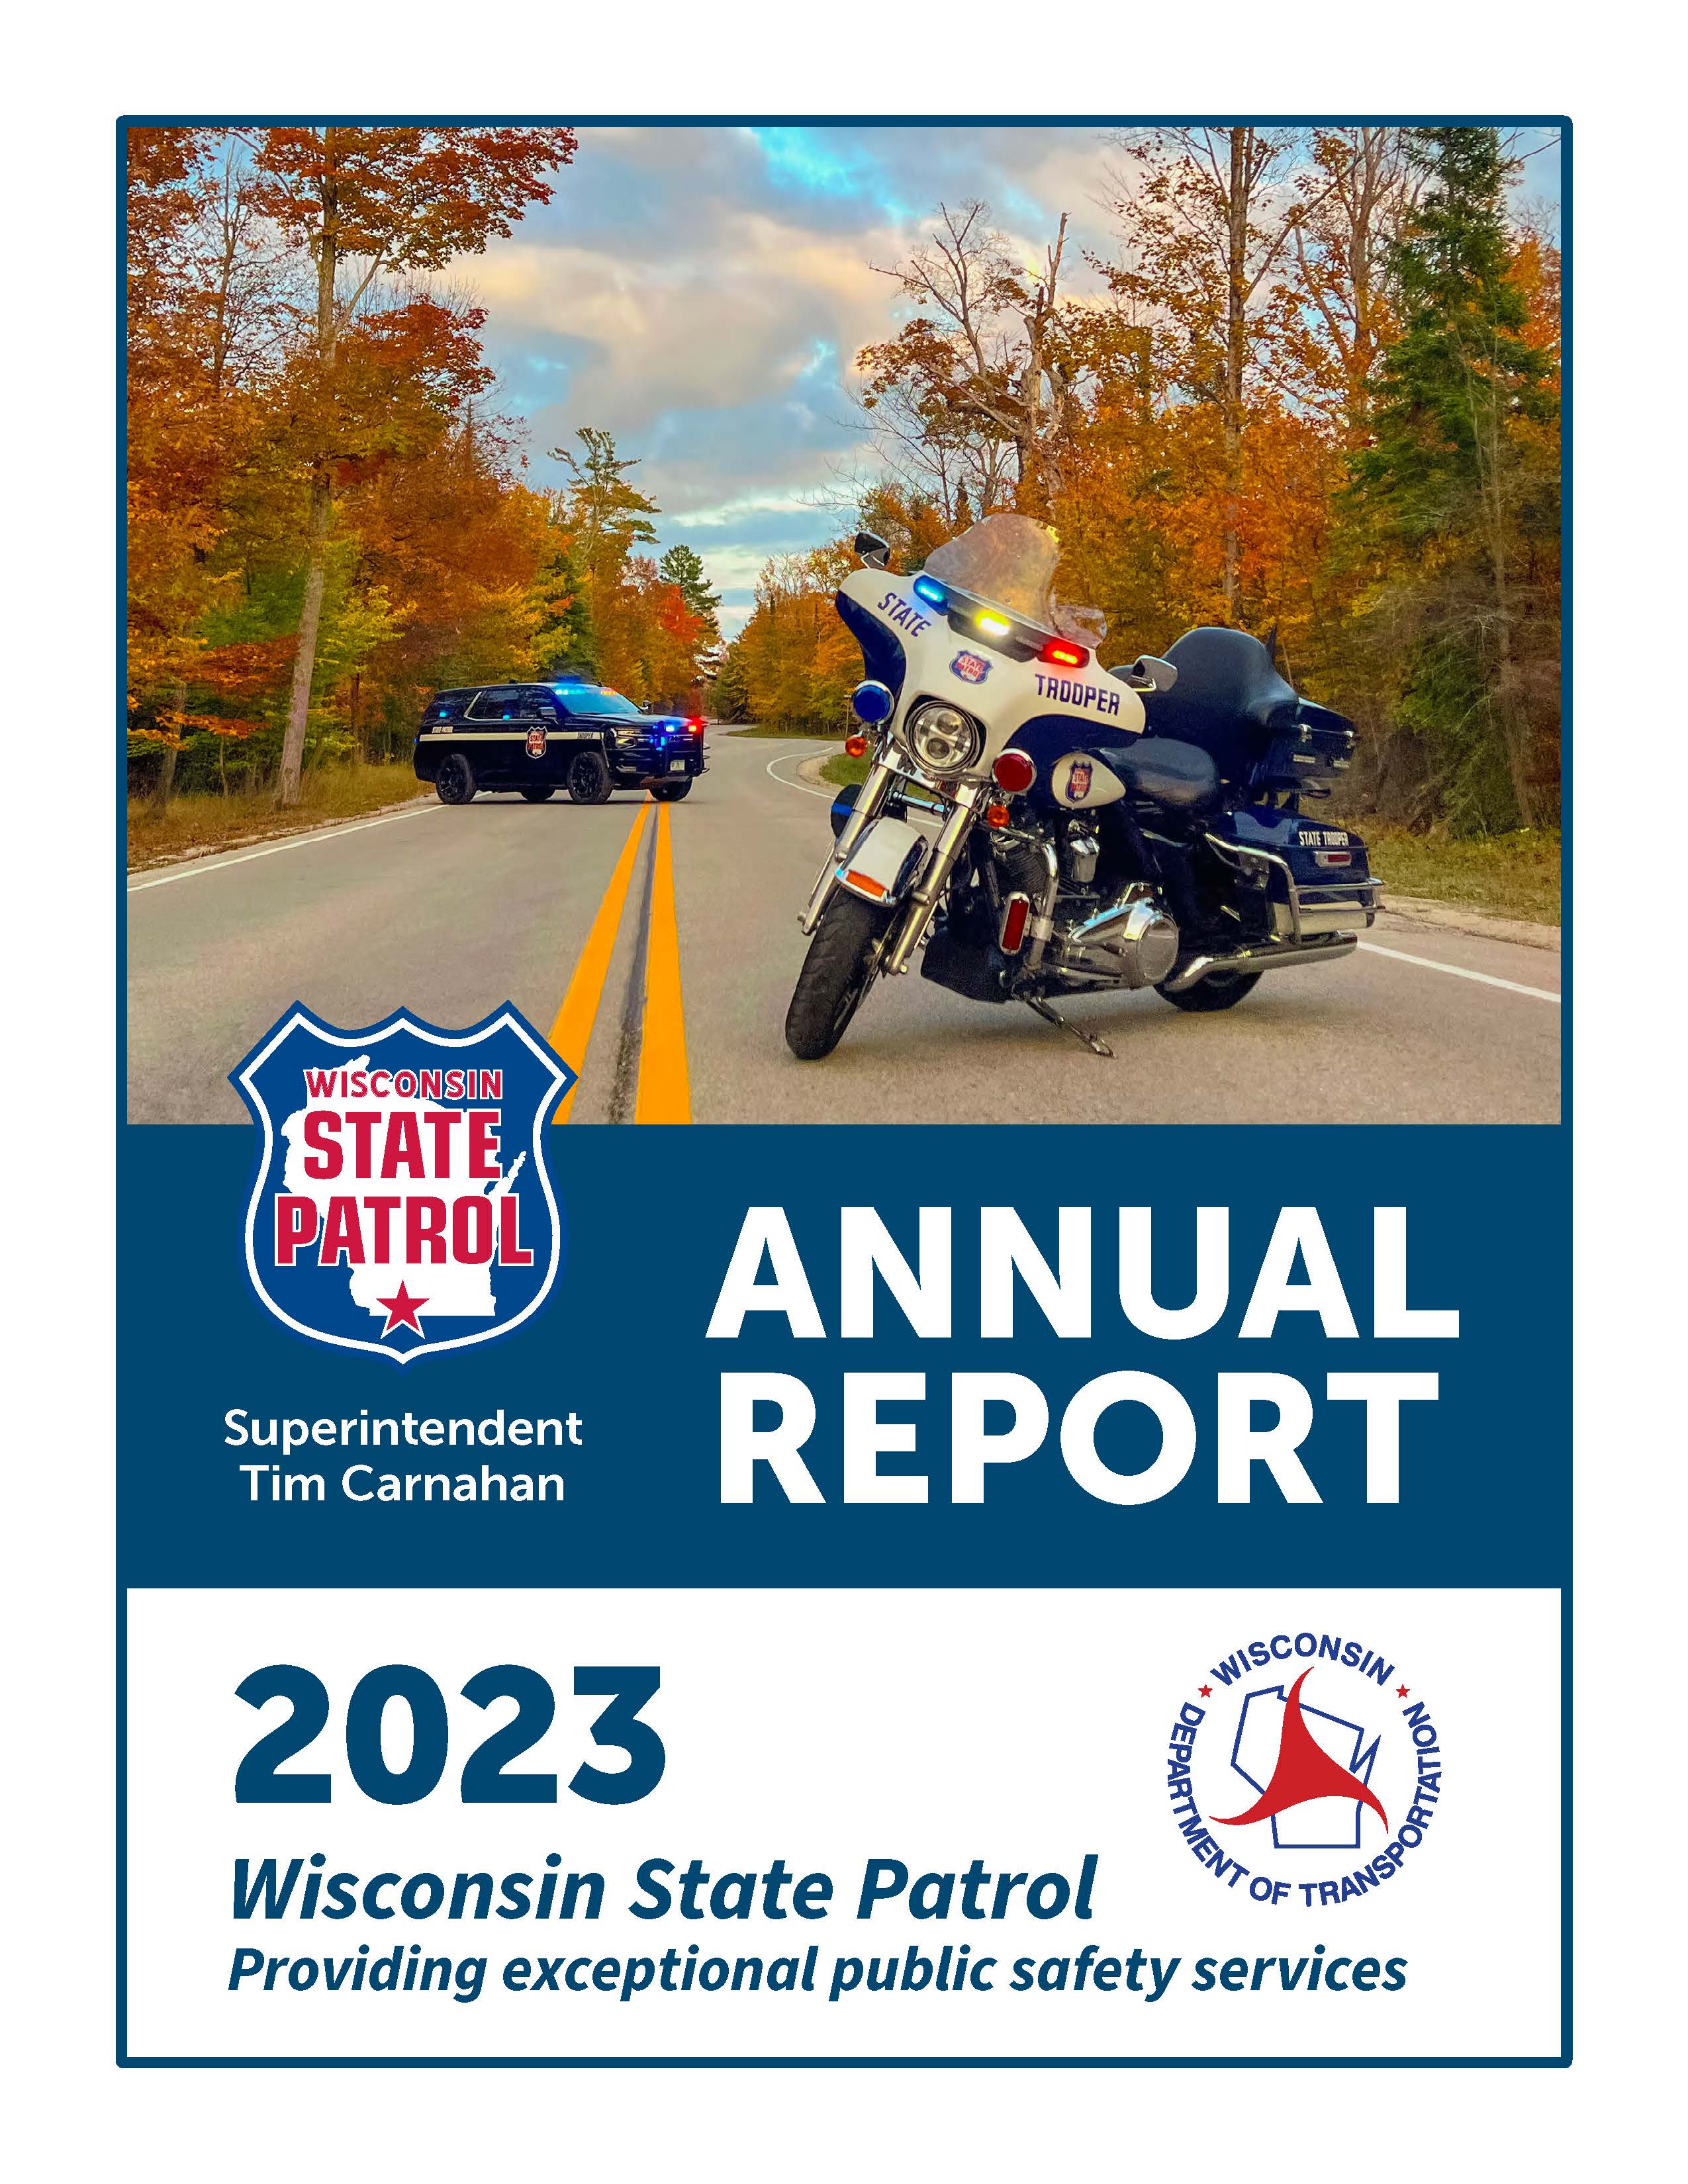 2023 Wisconsin State Patrol Annural Report.jpg